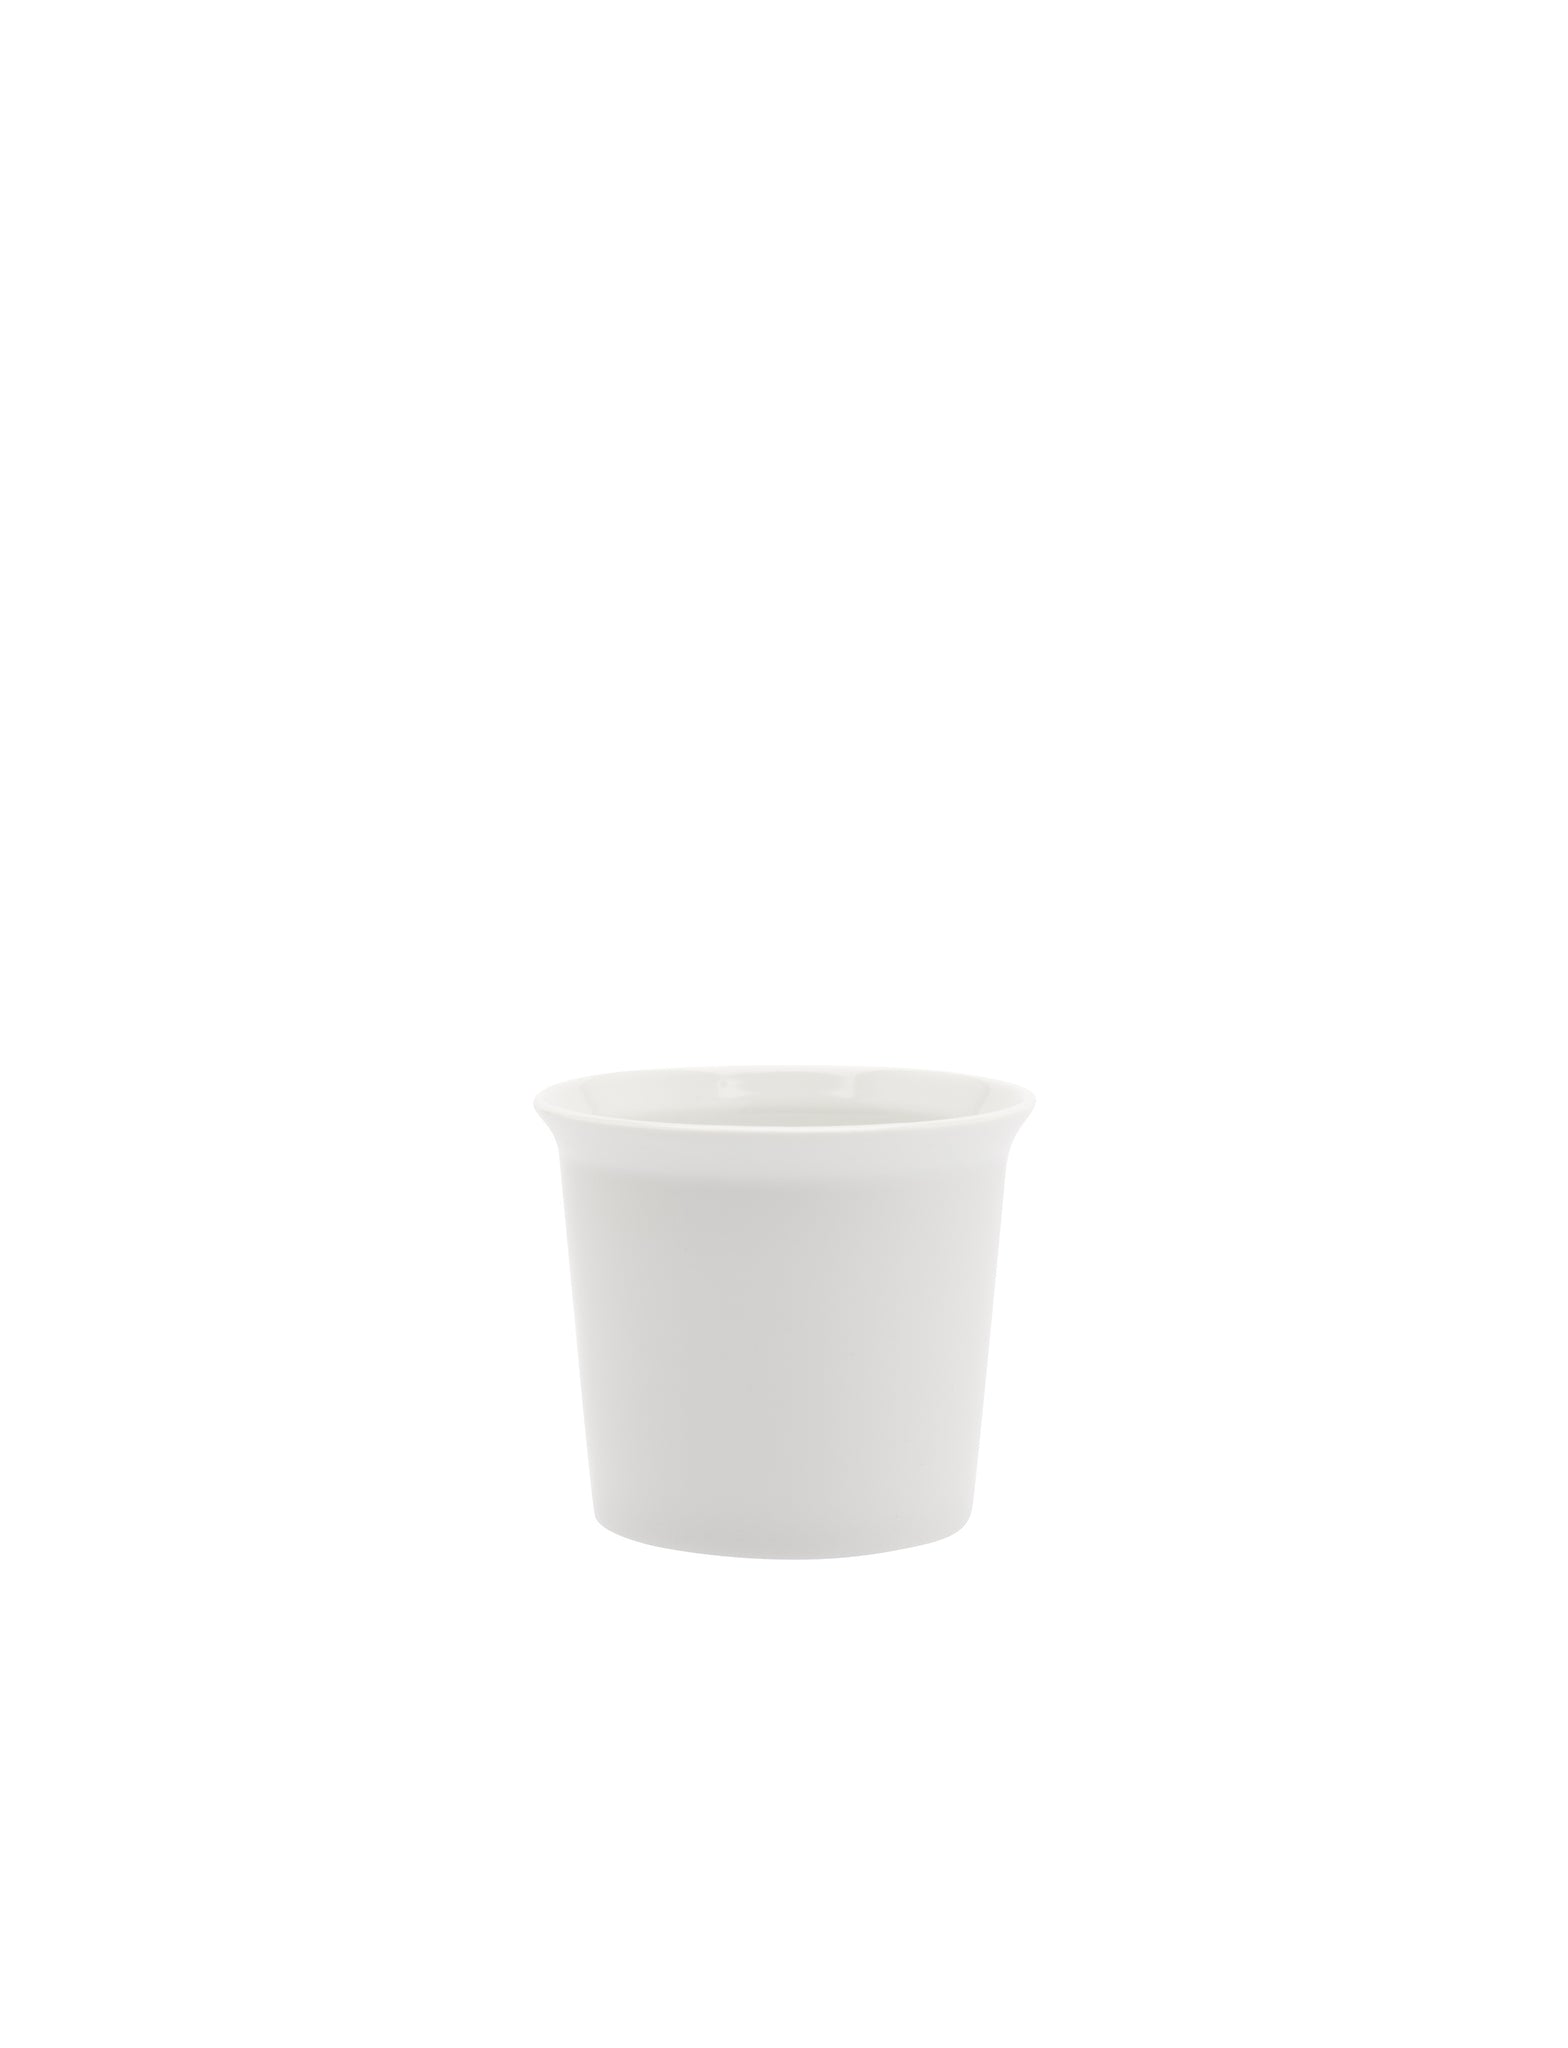 TY Coffee Cup glazed white